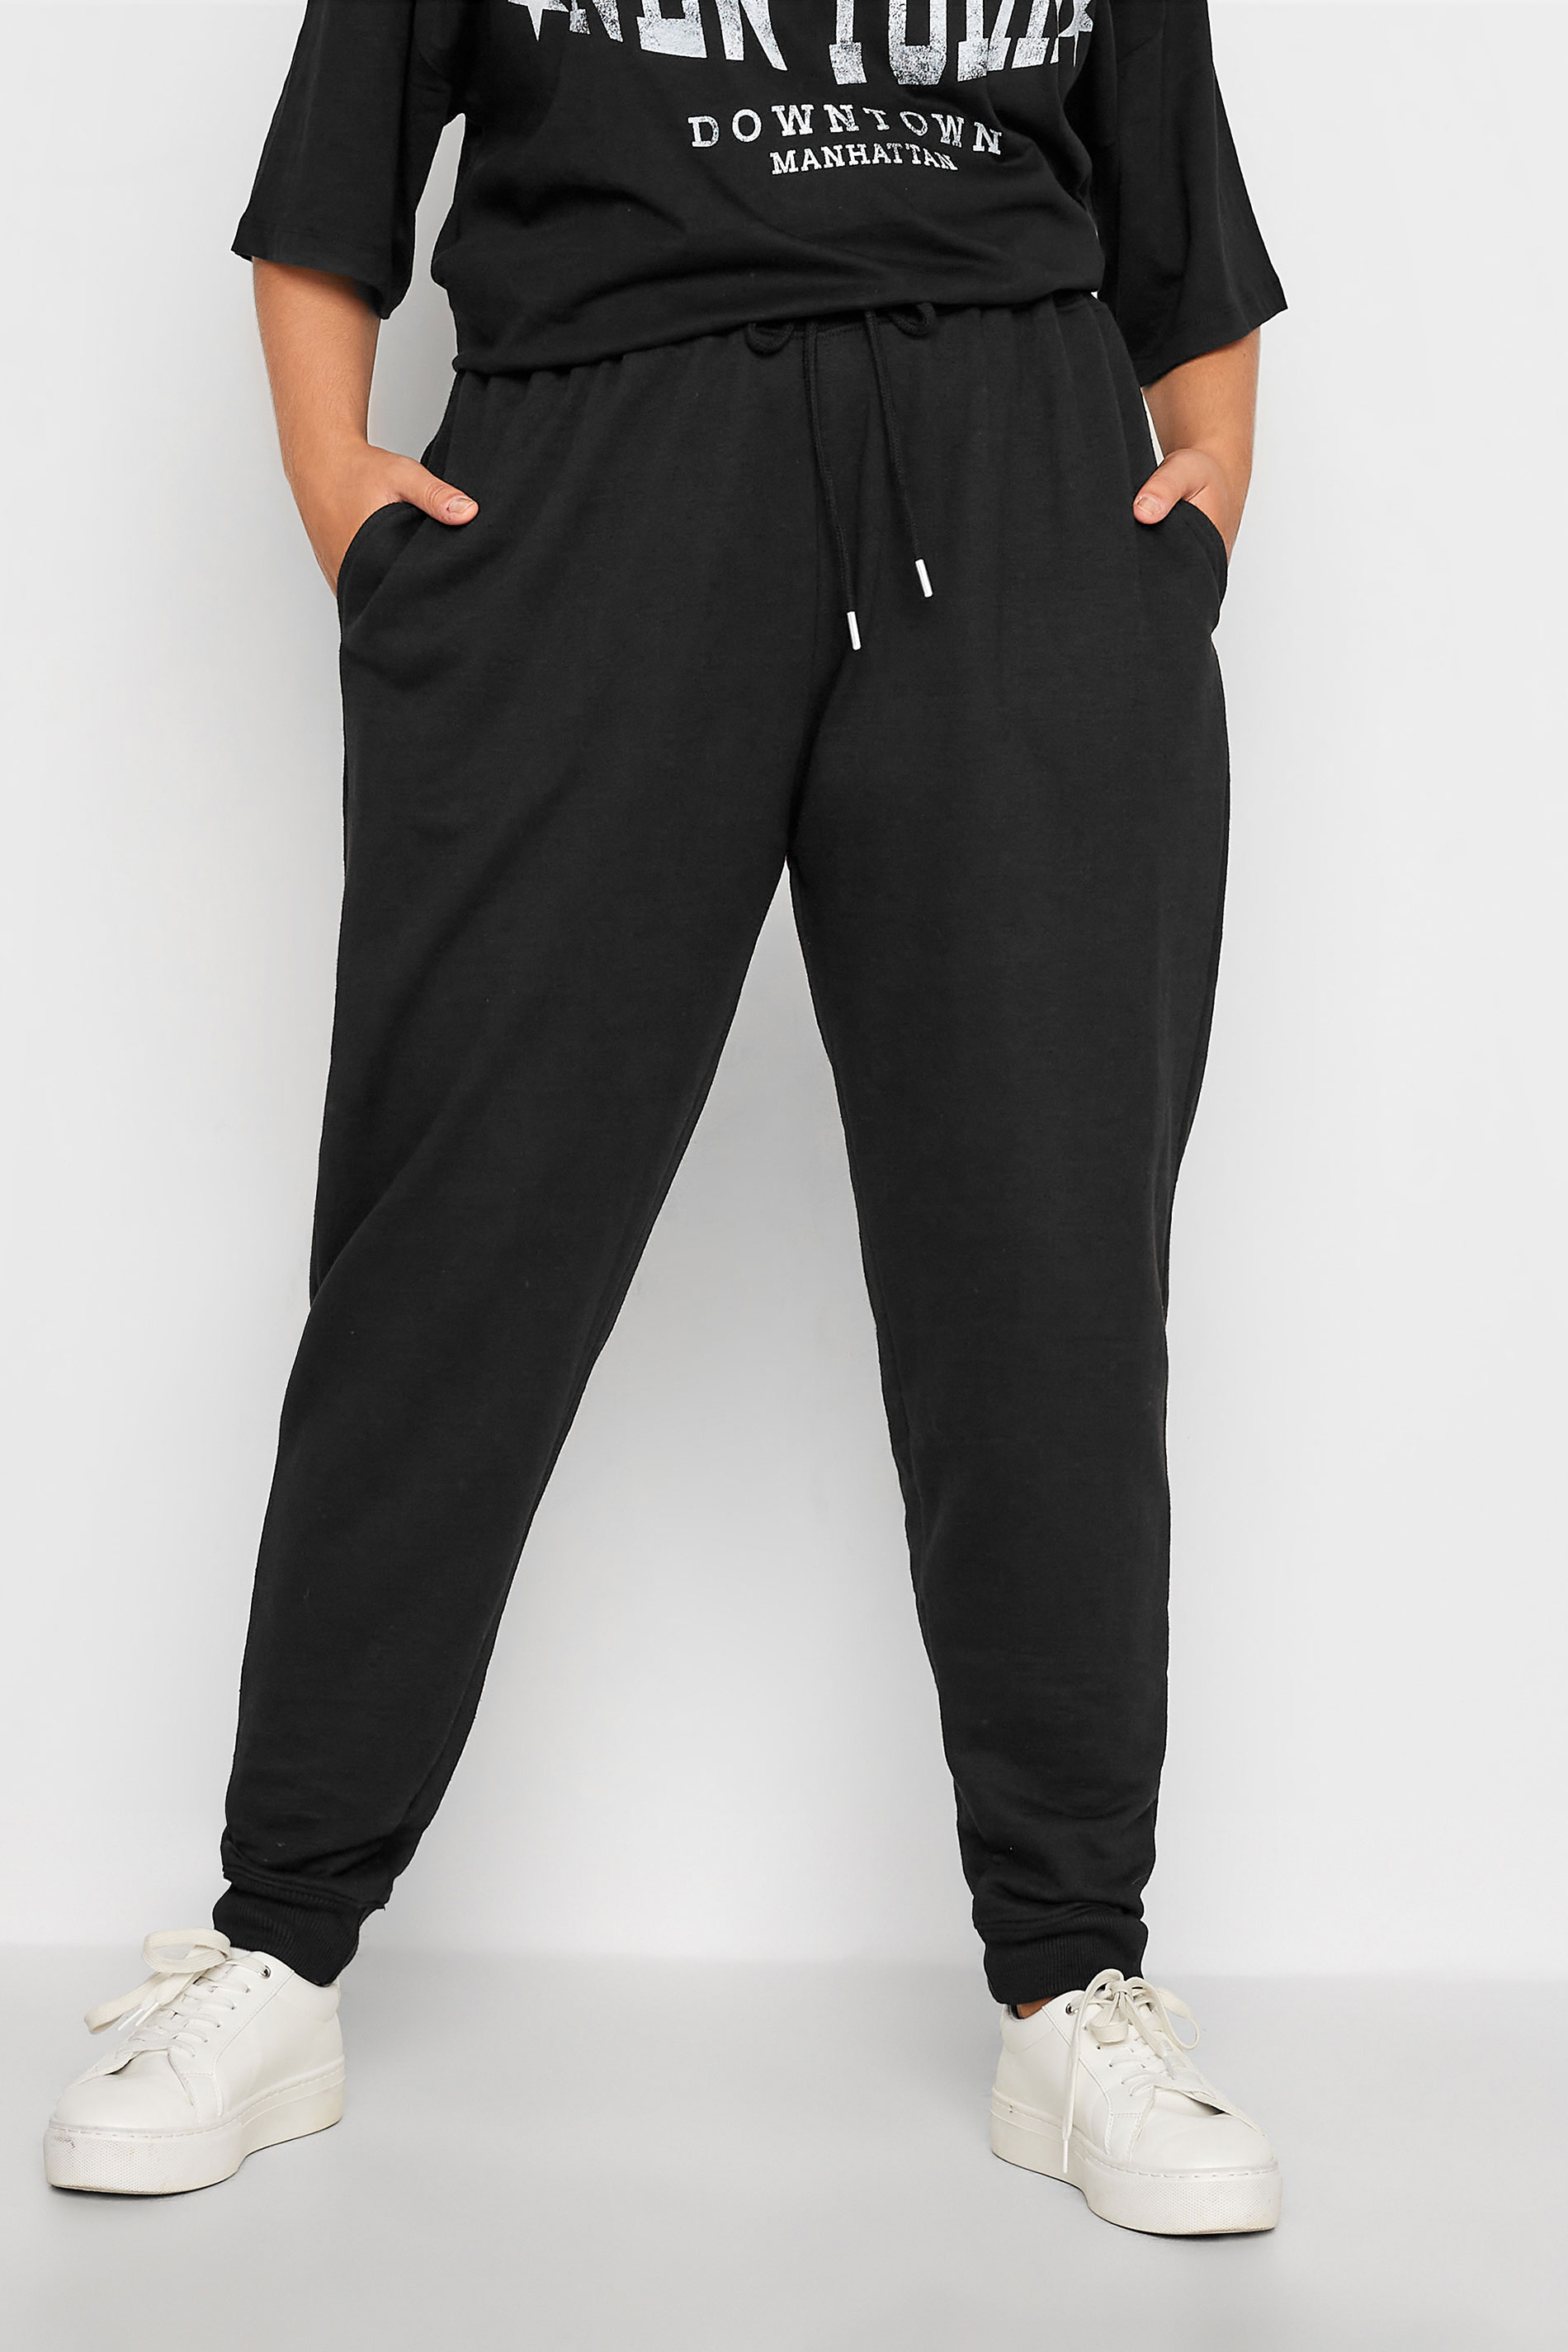 Plus Size Black Elasticated Joggers | Yours Clothing 1